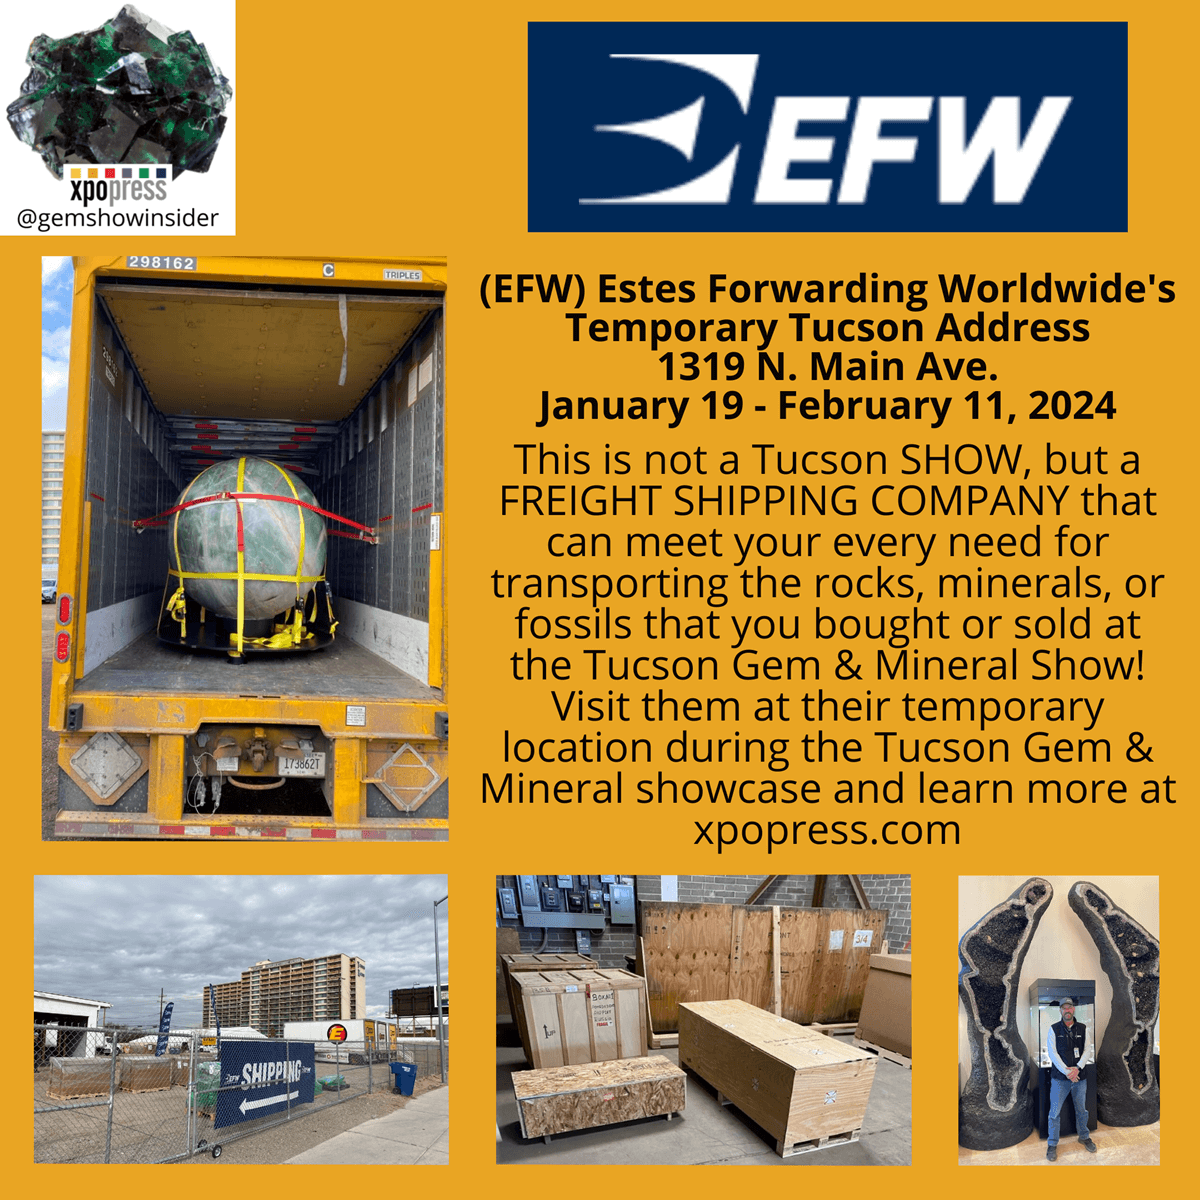 Shipping with Estes Forwarding Worldwide, Tucson 2024